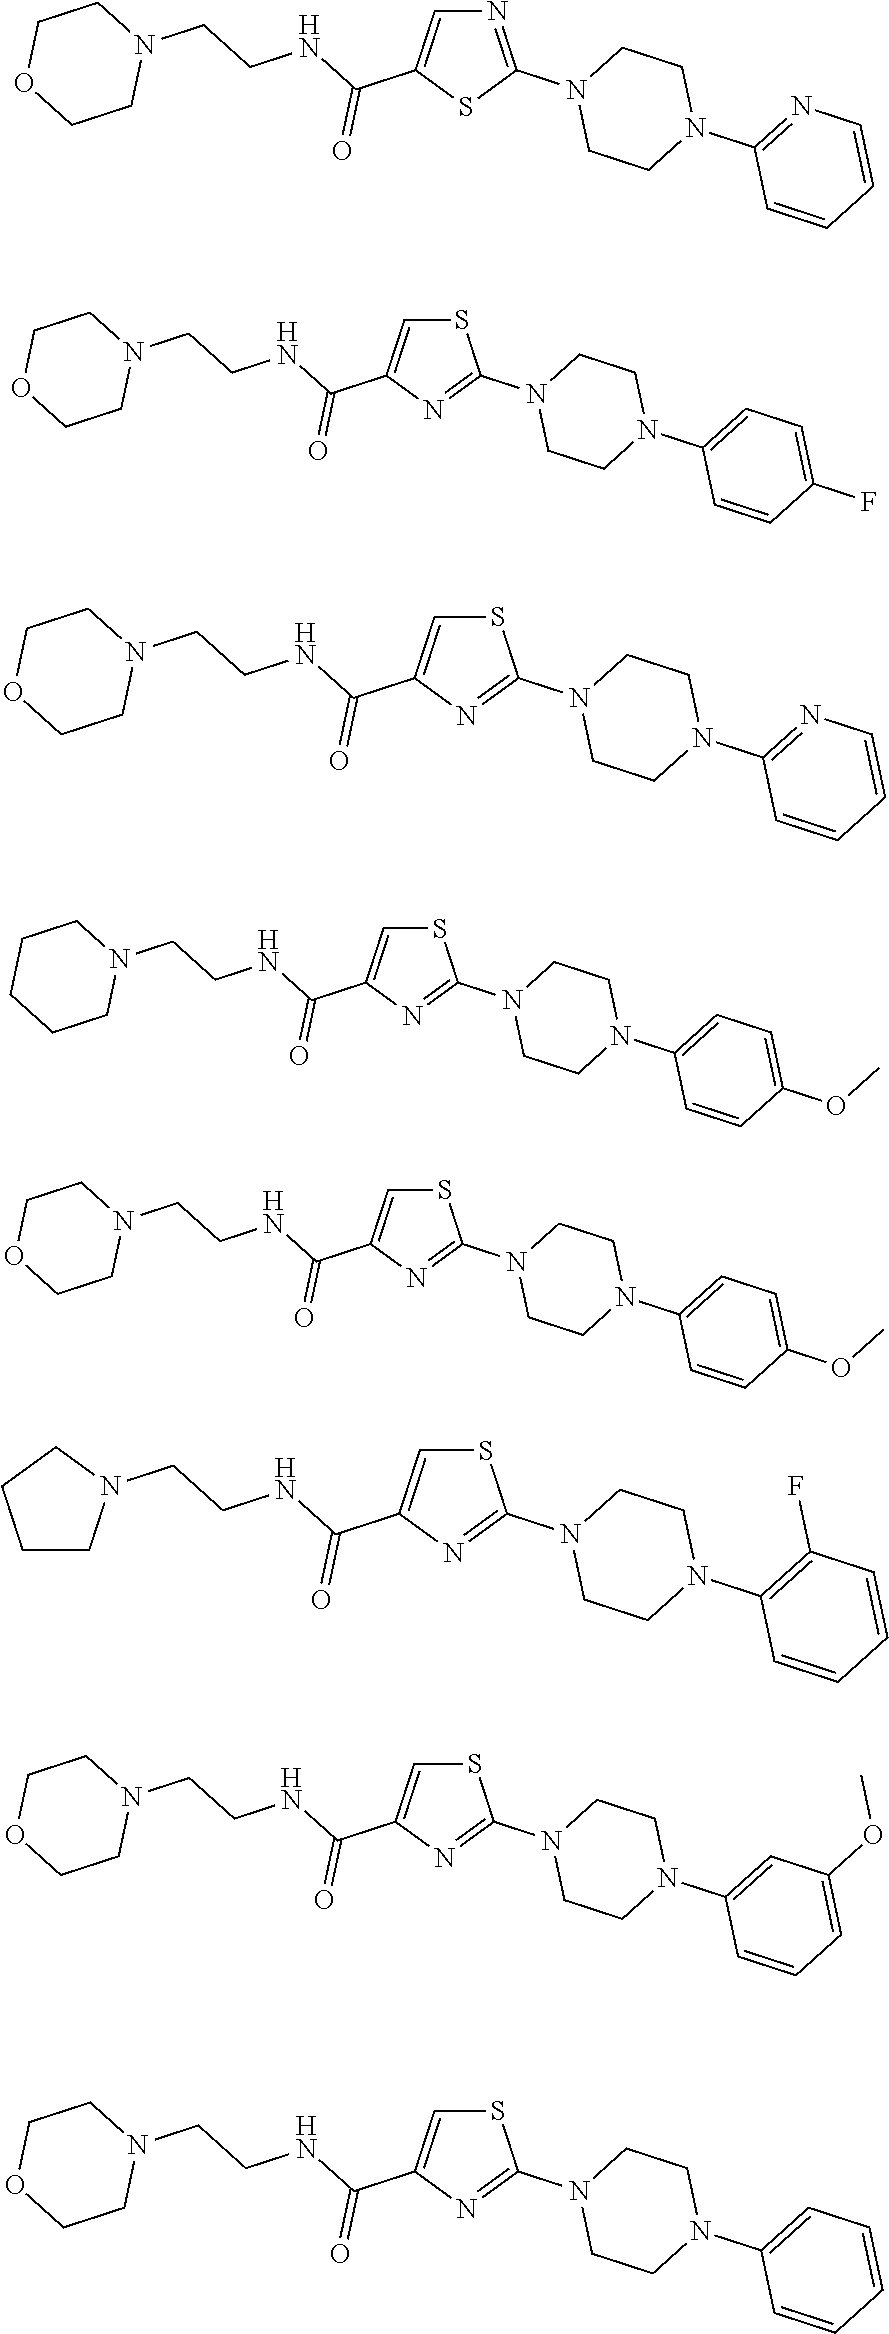 Bis-heteroaryl derivatives as modulators of protein aggregation